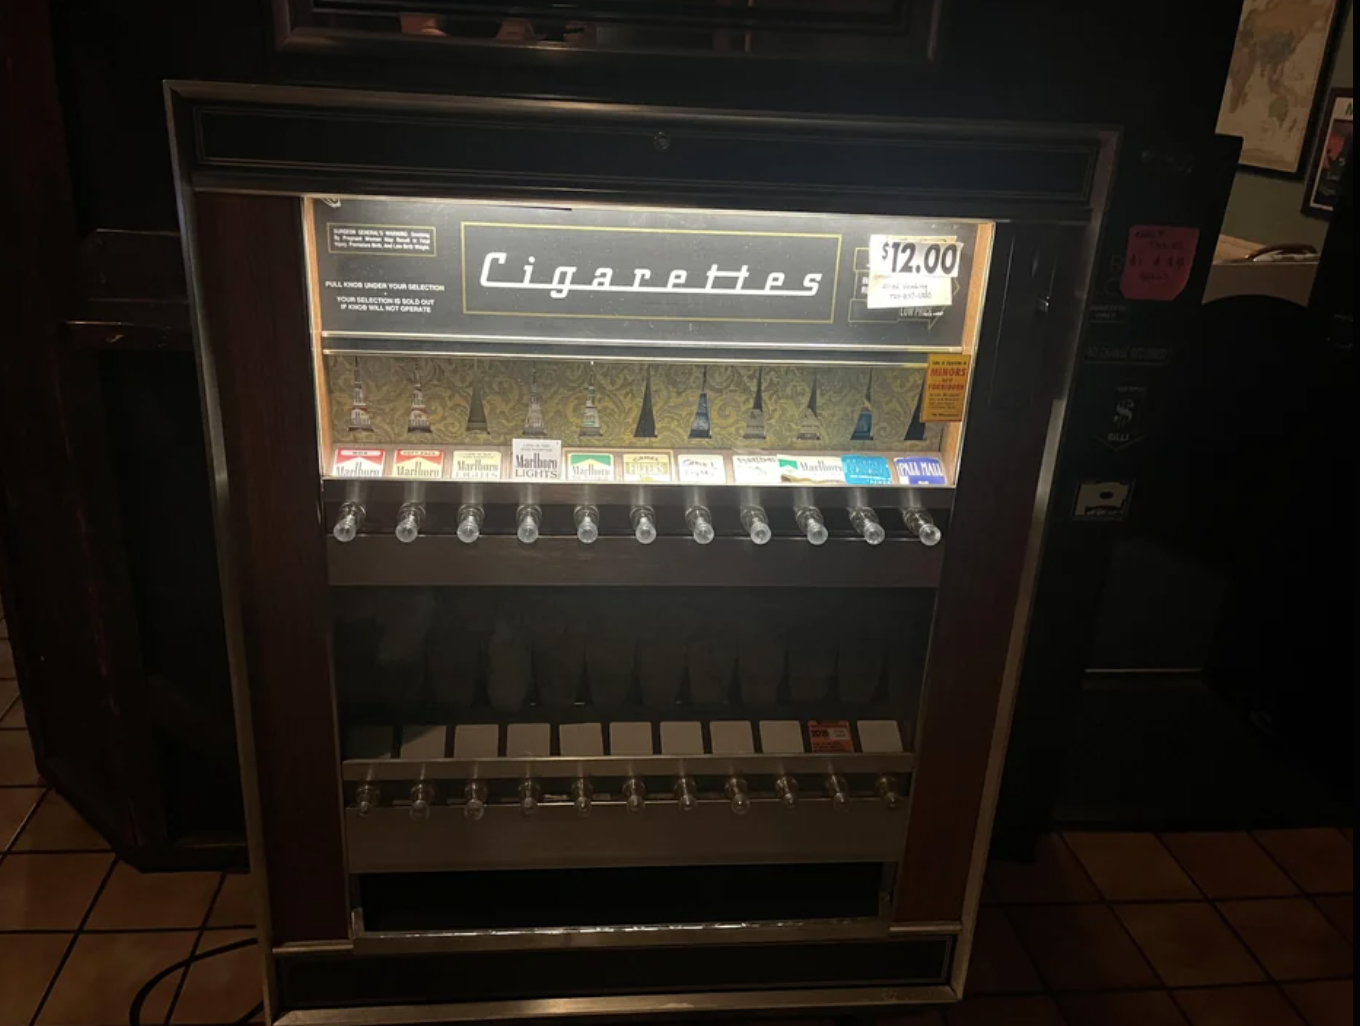 A cigarette vending machine is shown